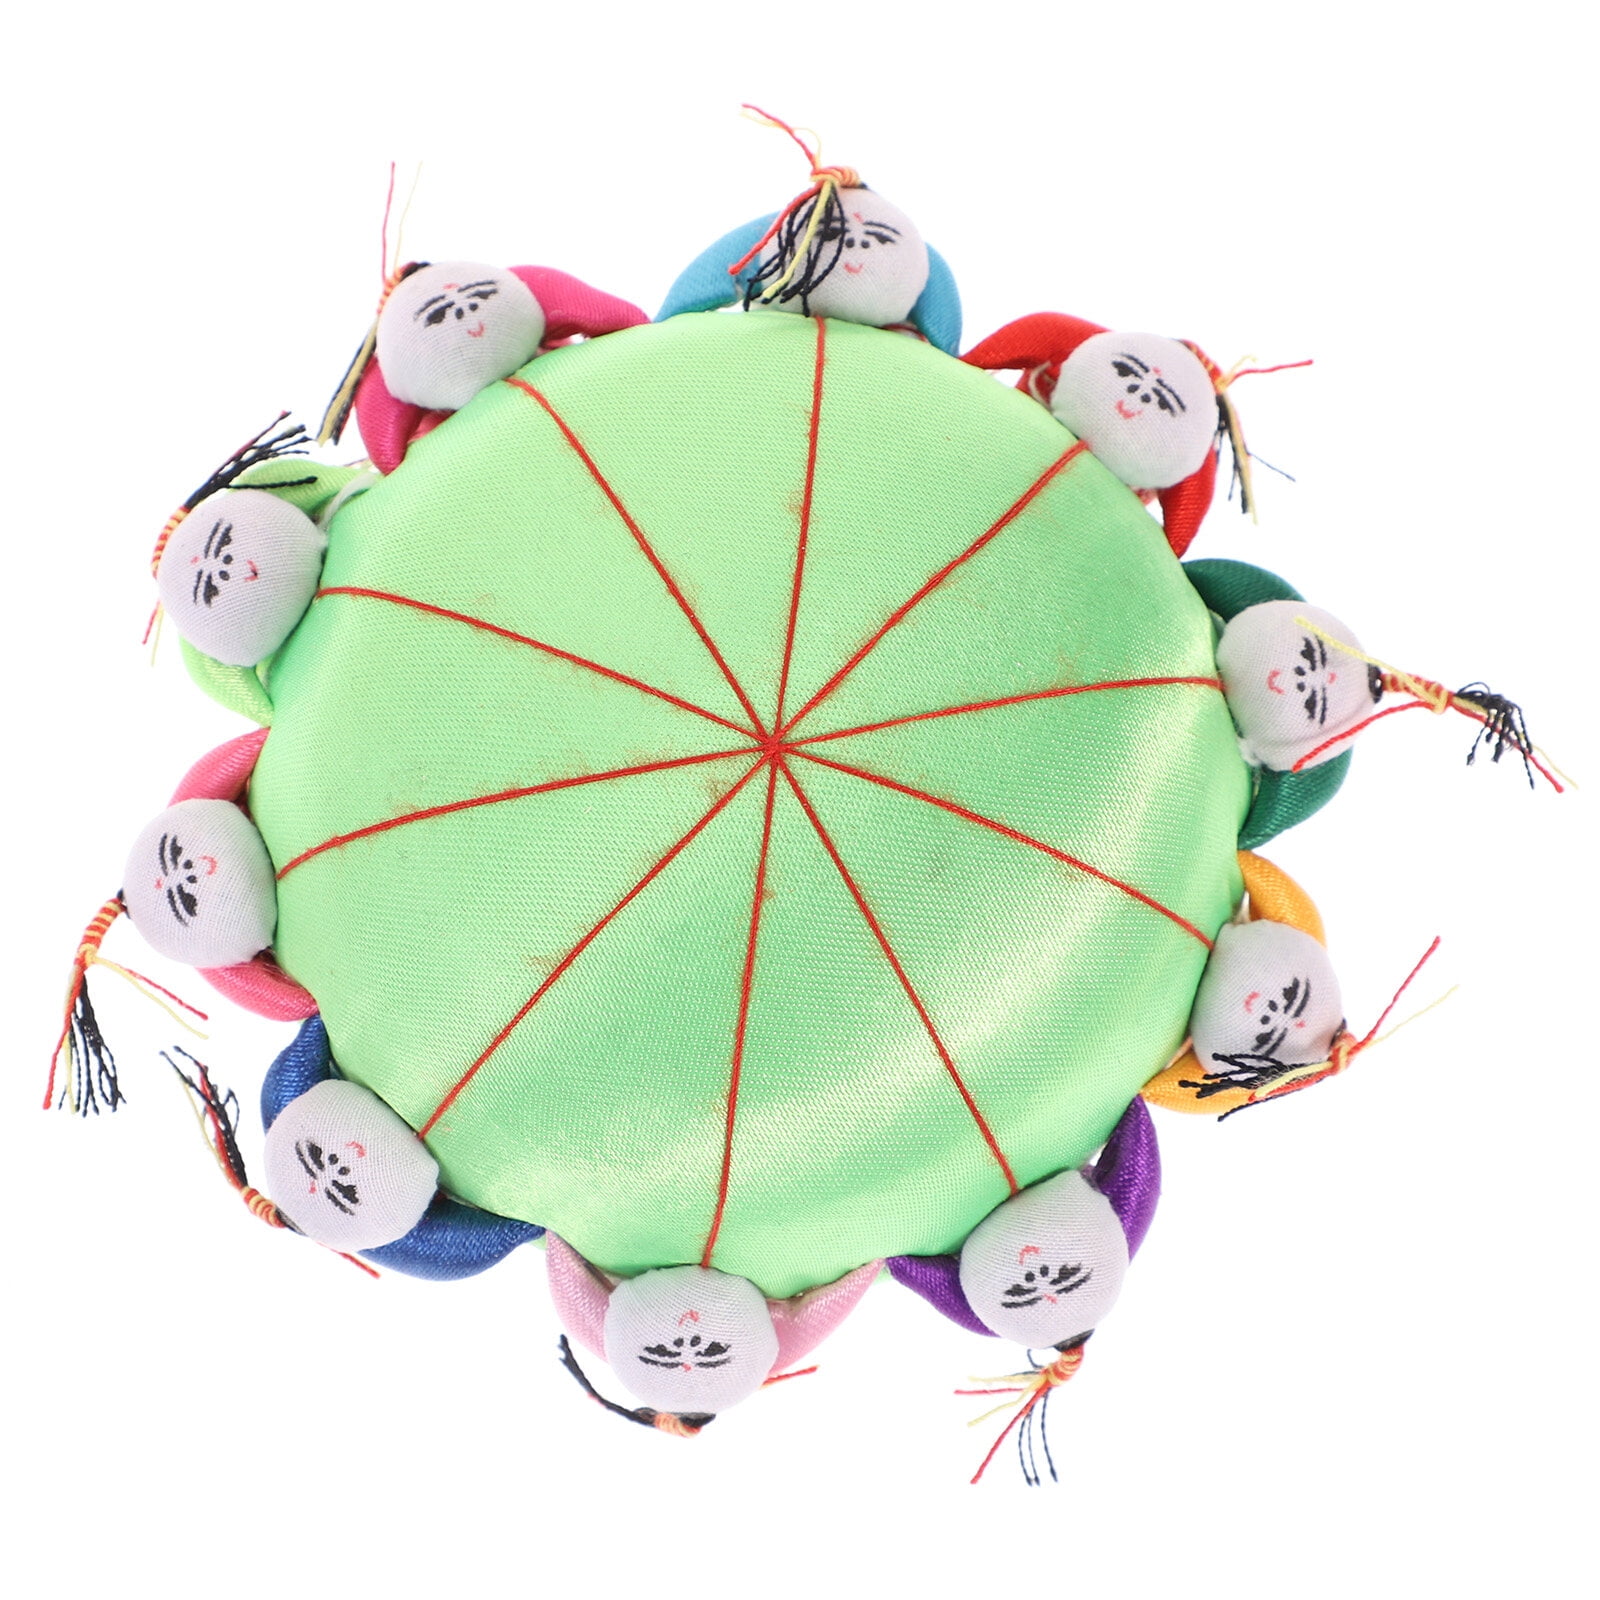 Pink Satin Sewing Needle Pincushion Pin Cushion 10 Boy Chinese 4.25 x 2.25”